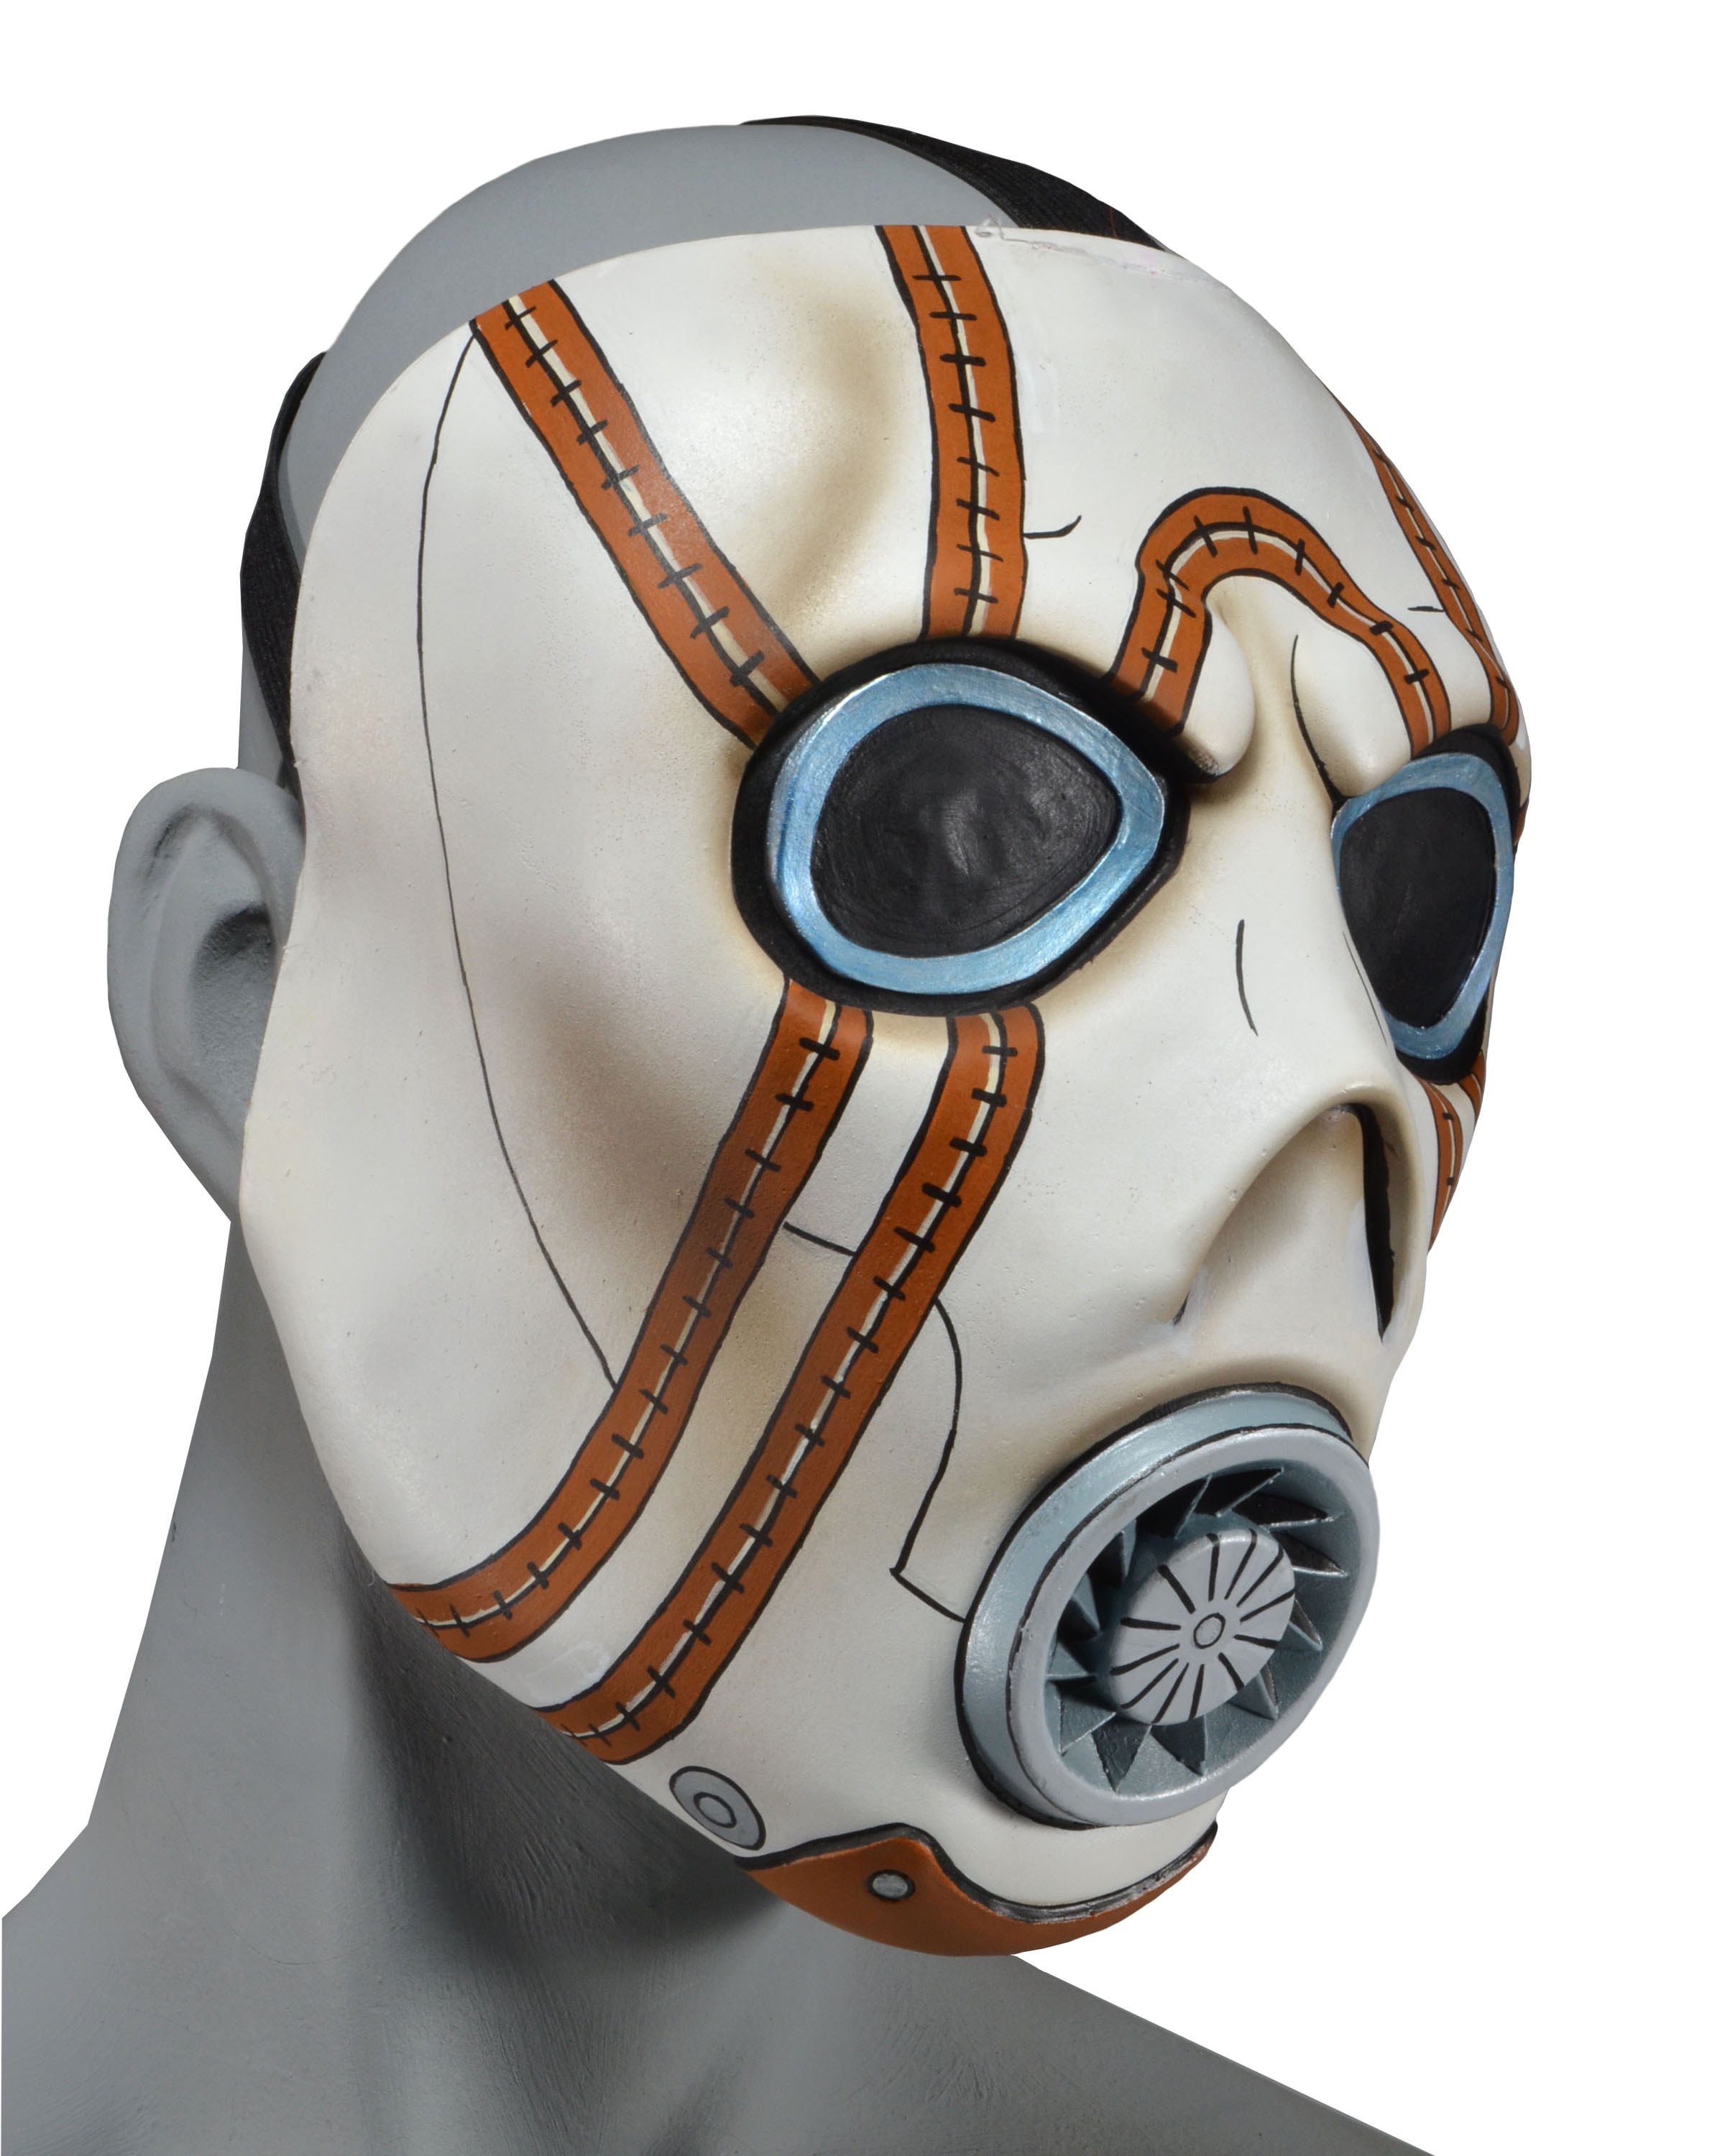 Game Borderlands 3 Psycho Latex Mask Led Light Eyes Scary Halloween Cosplay 